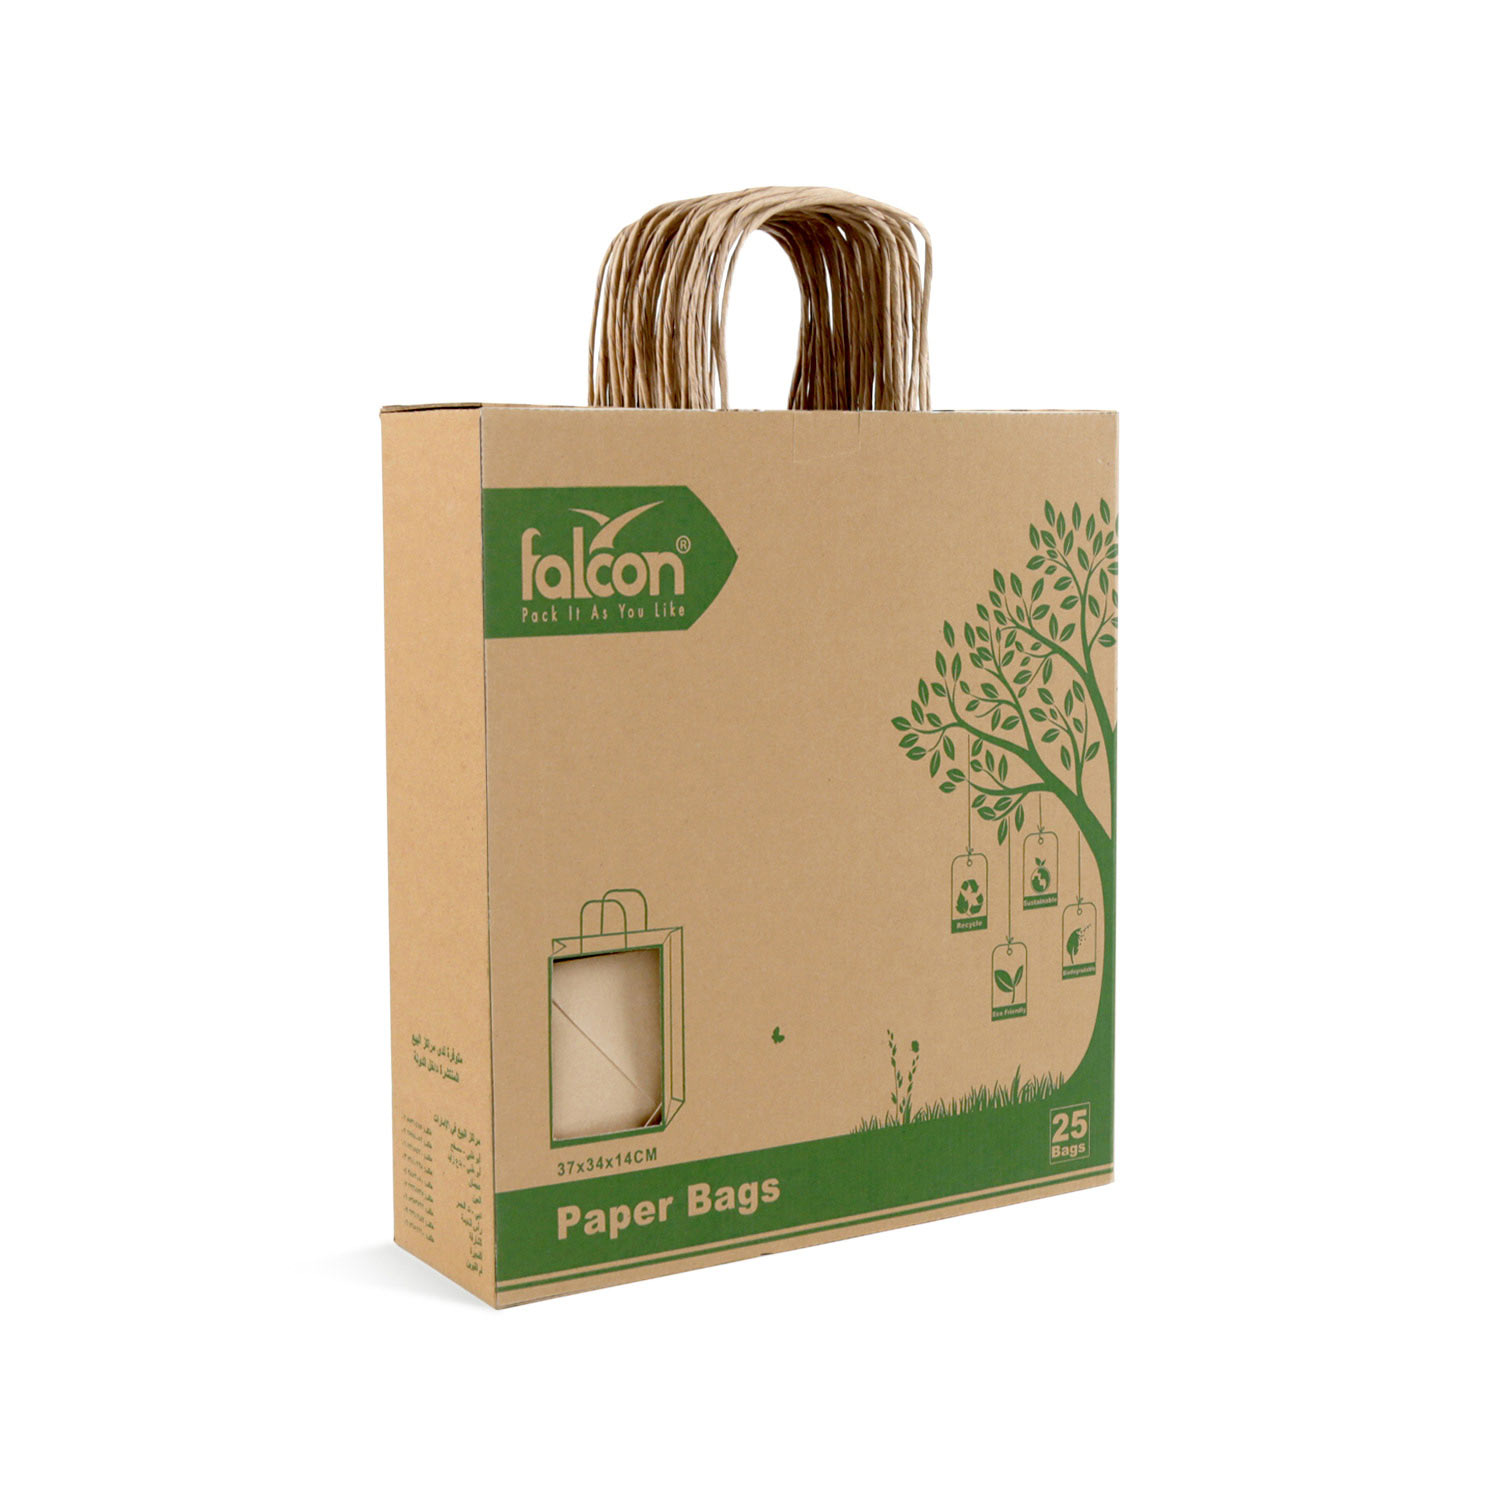 Paper Shopping Bag with Handle, Brown Colour, 37cm x 34cm x 14cm 